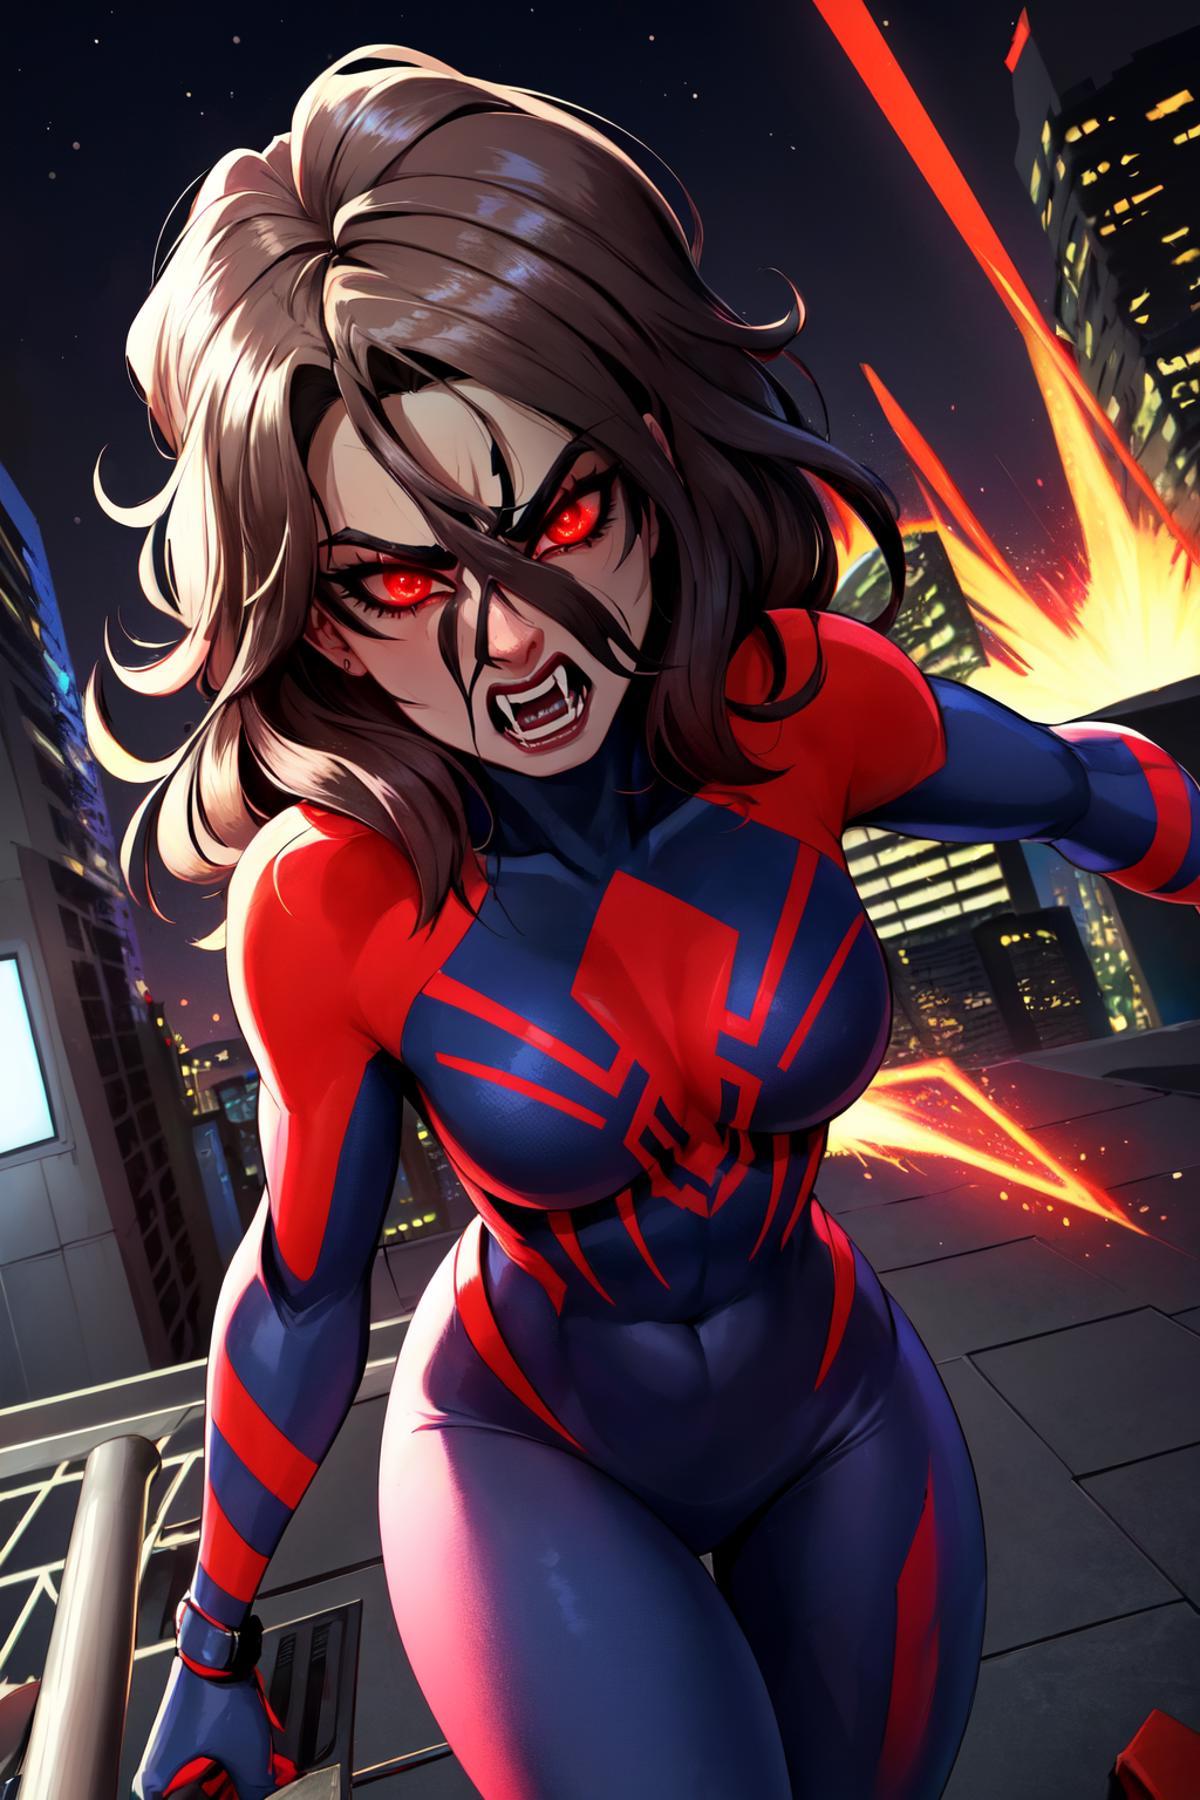 Spider-Woman 2099 (Spider-Verse) image by Manityro